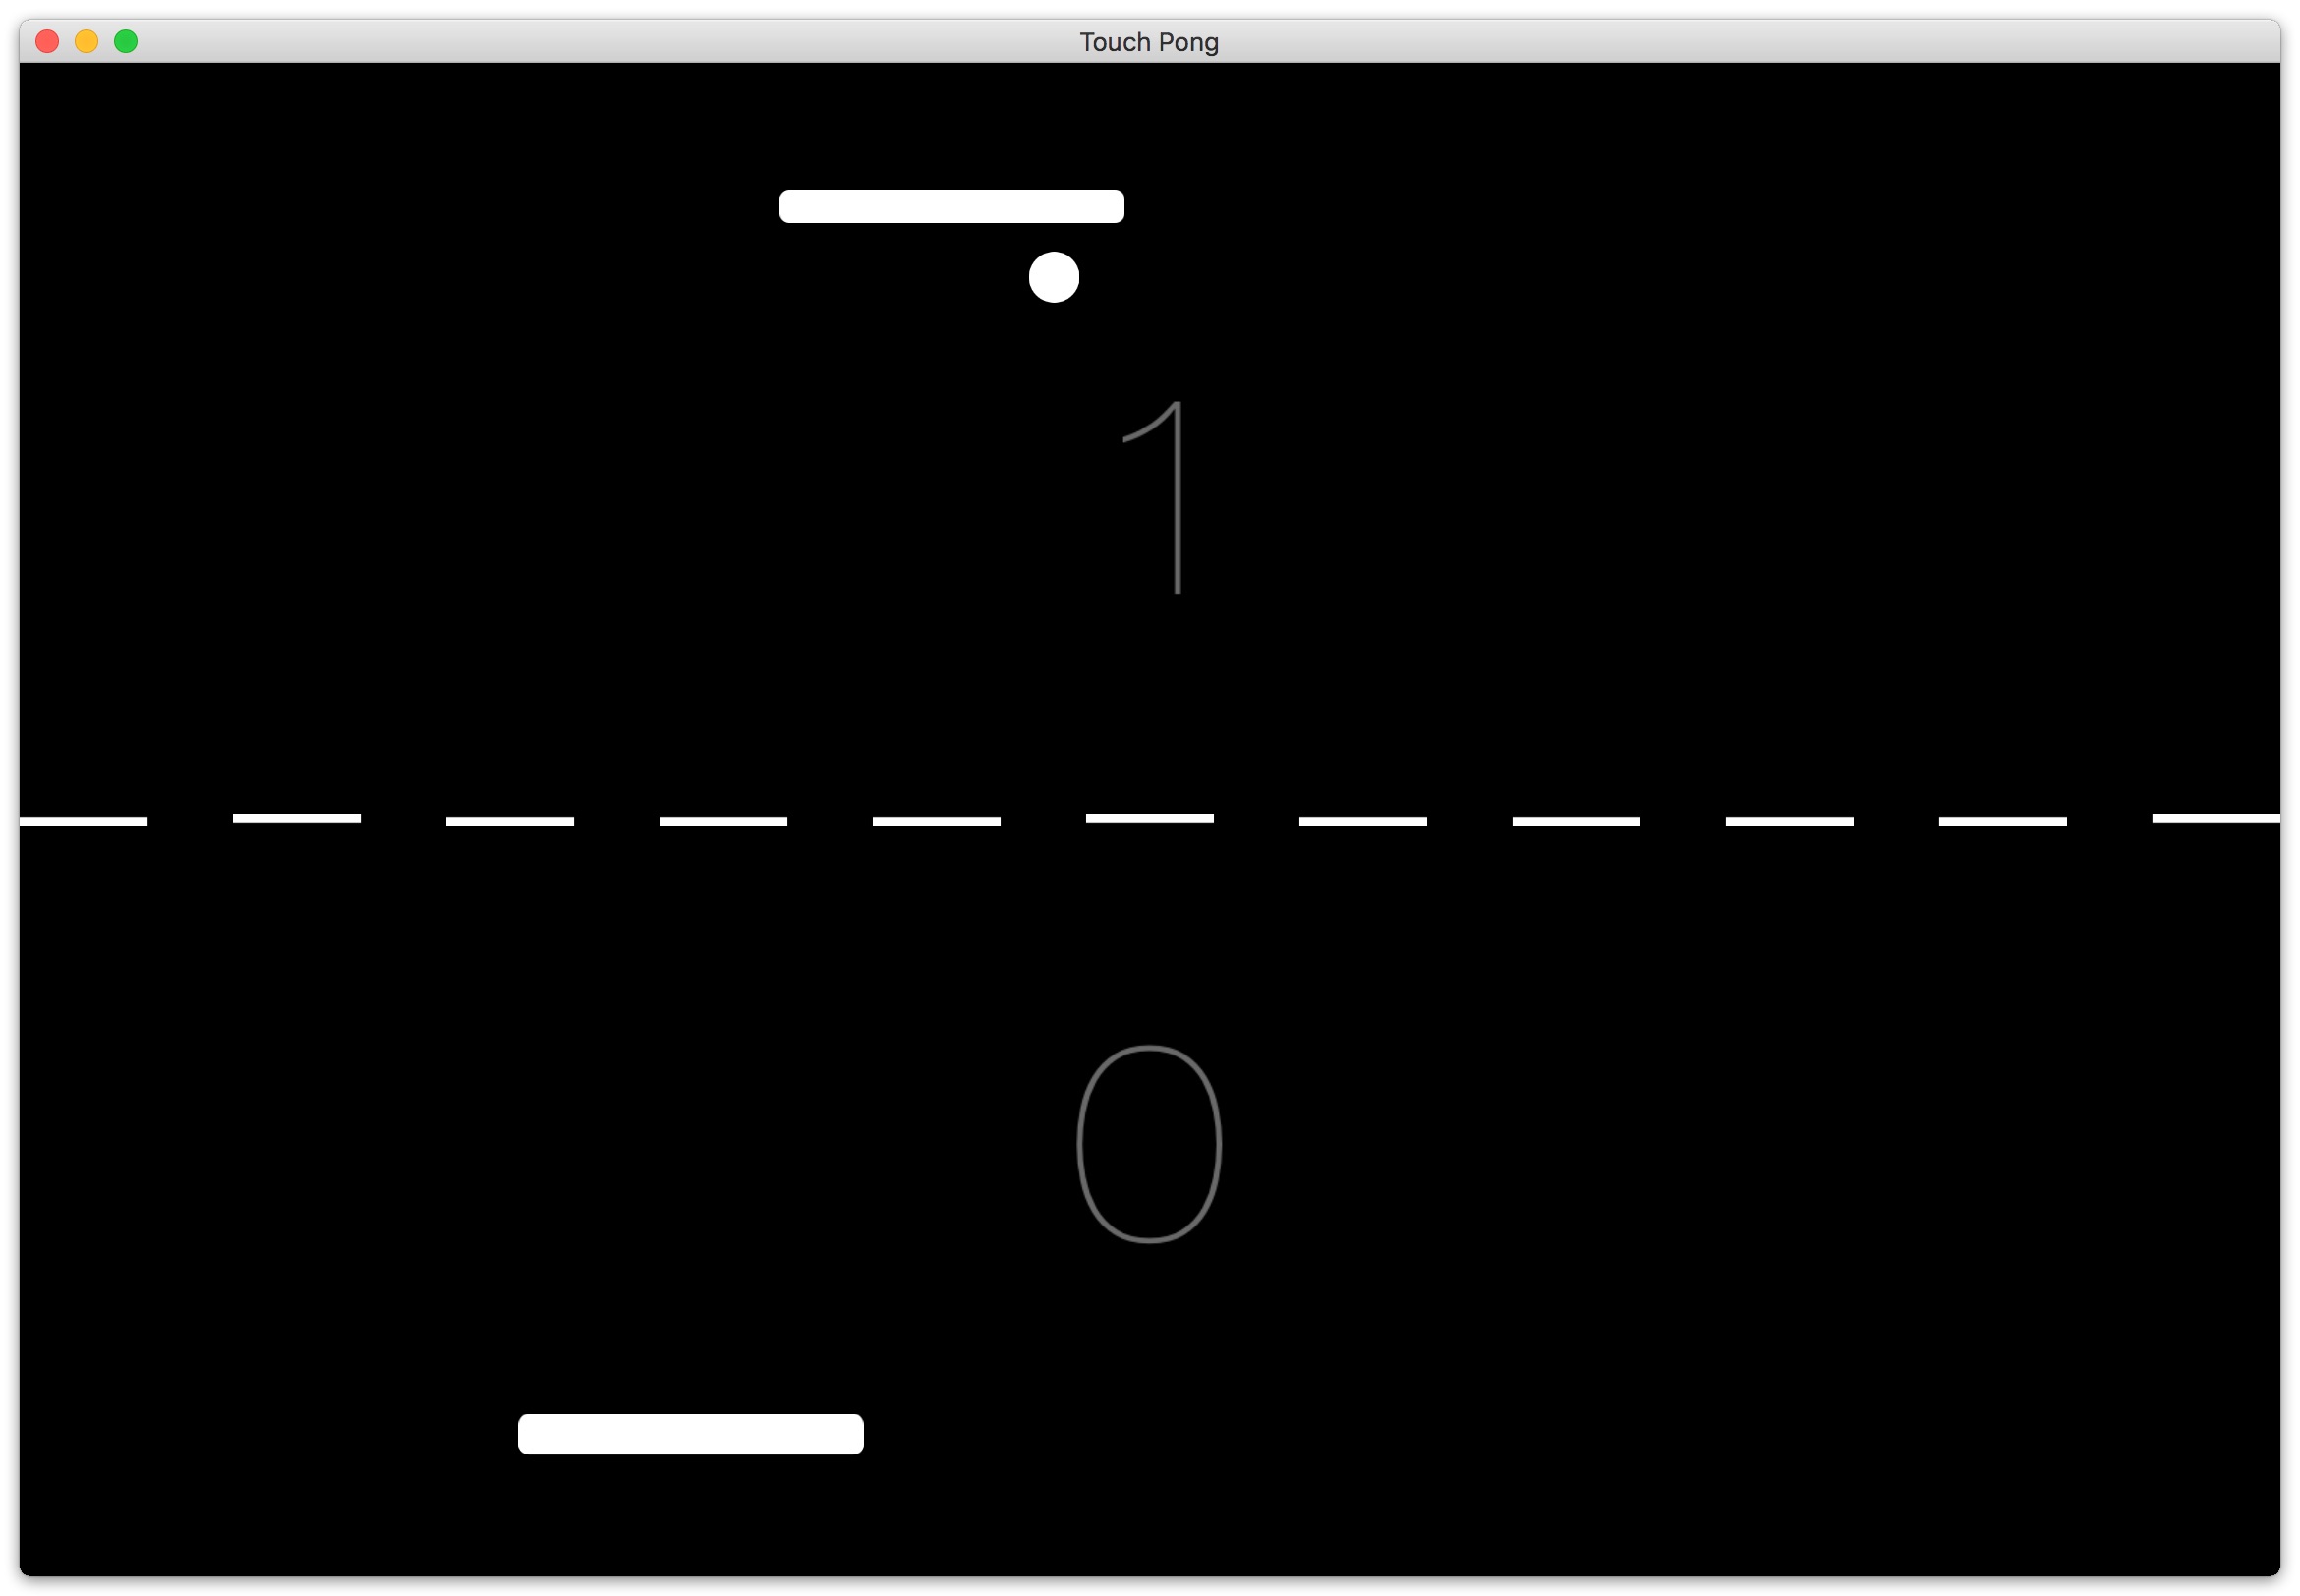 Touch Barを利用したピンポンゲーム Touch Pong Macの手書き説明書